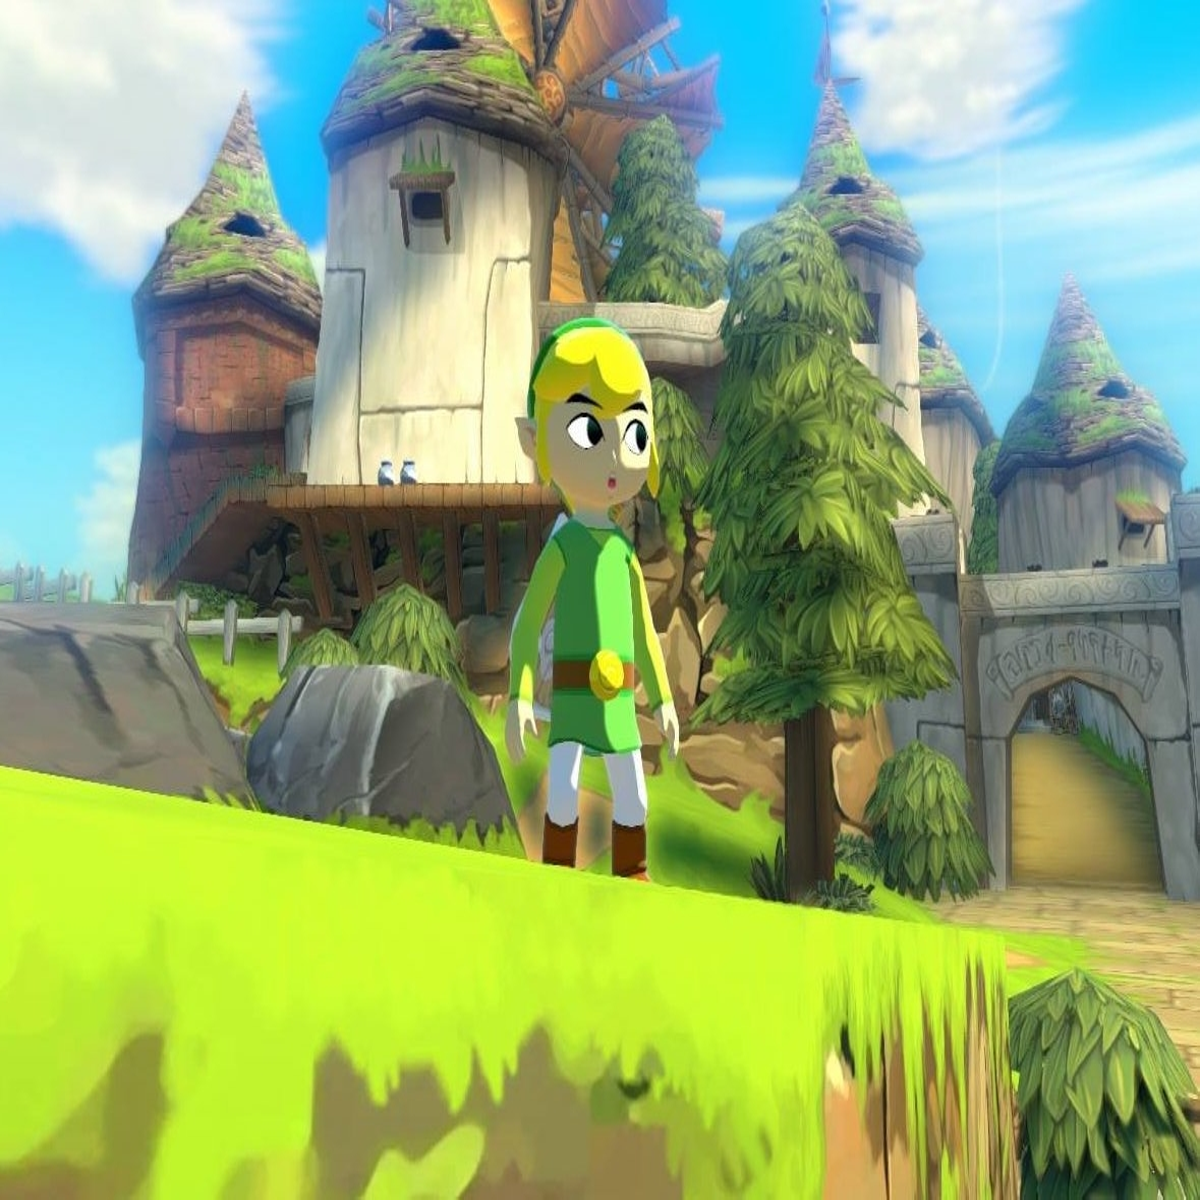 The Legend of Zelda: The Wind Waker HD - Gamecube vs. Wii U